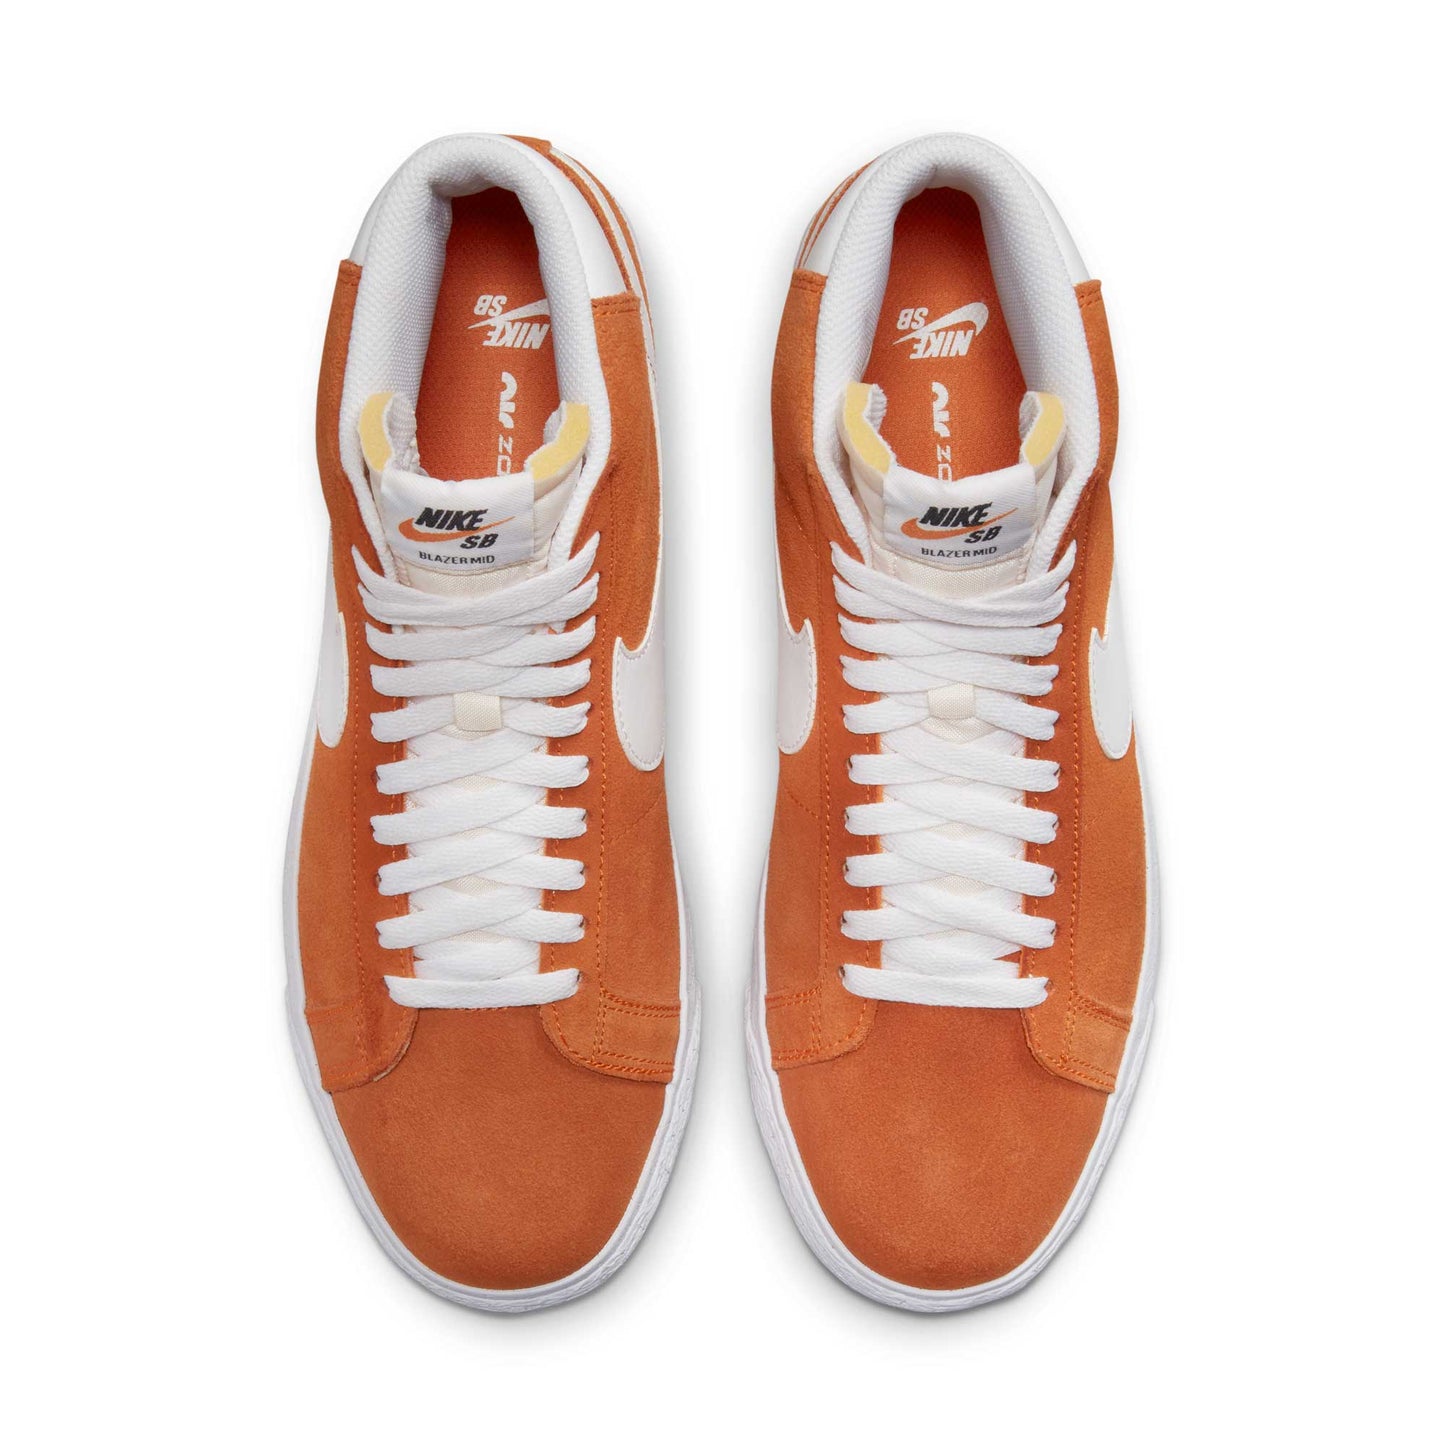 Nike SB Zoom Blazer Mid, safety orange/white-safety orange-white - Tiki Room Skateboards - 4